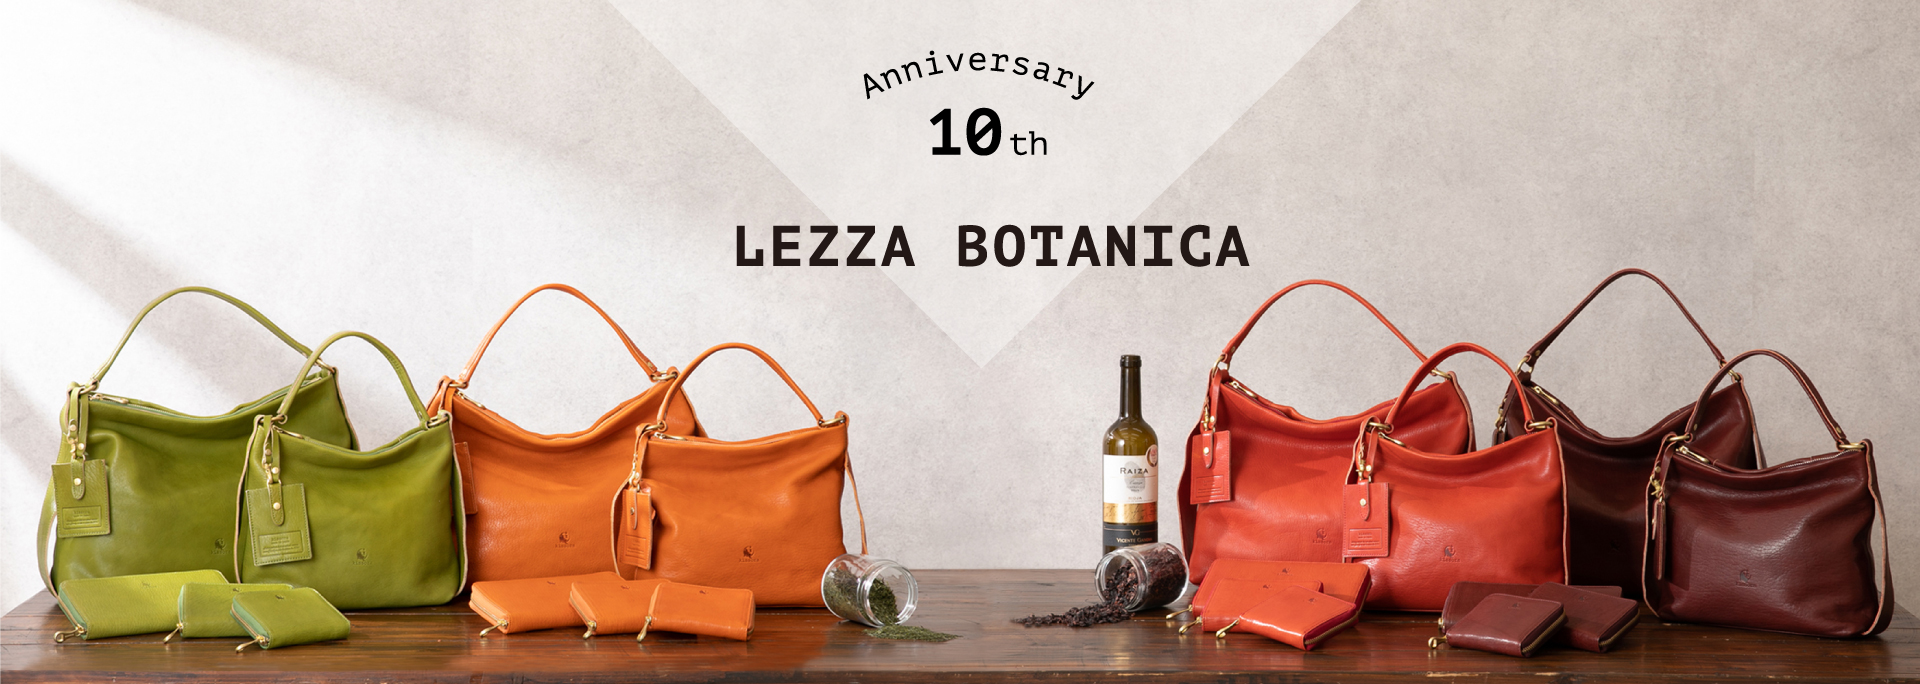 Anniversary 10th LEZZA BOTANICA